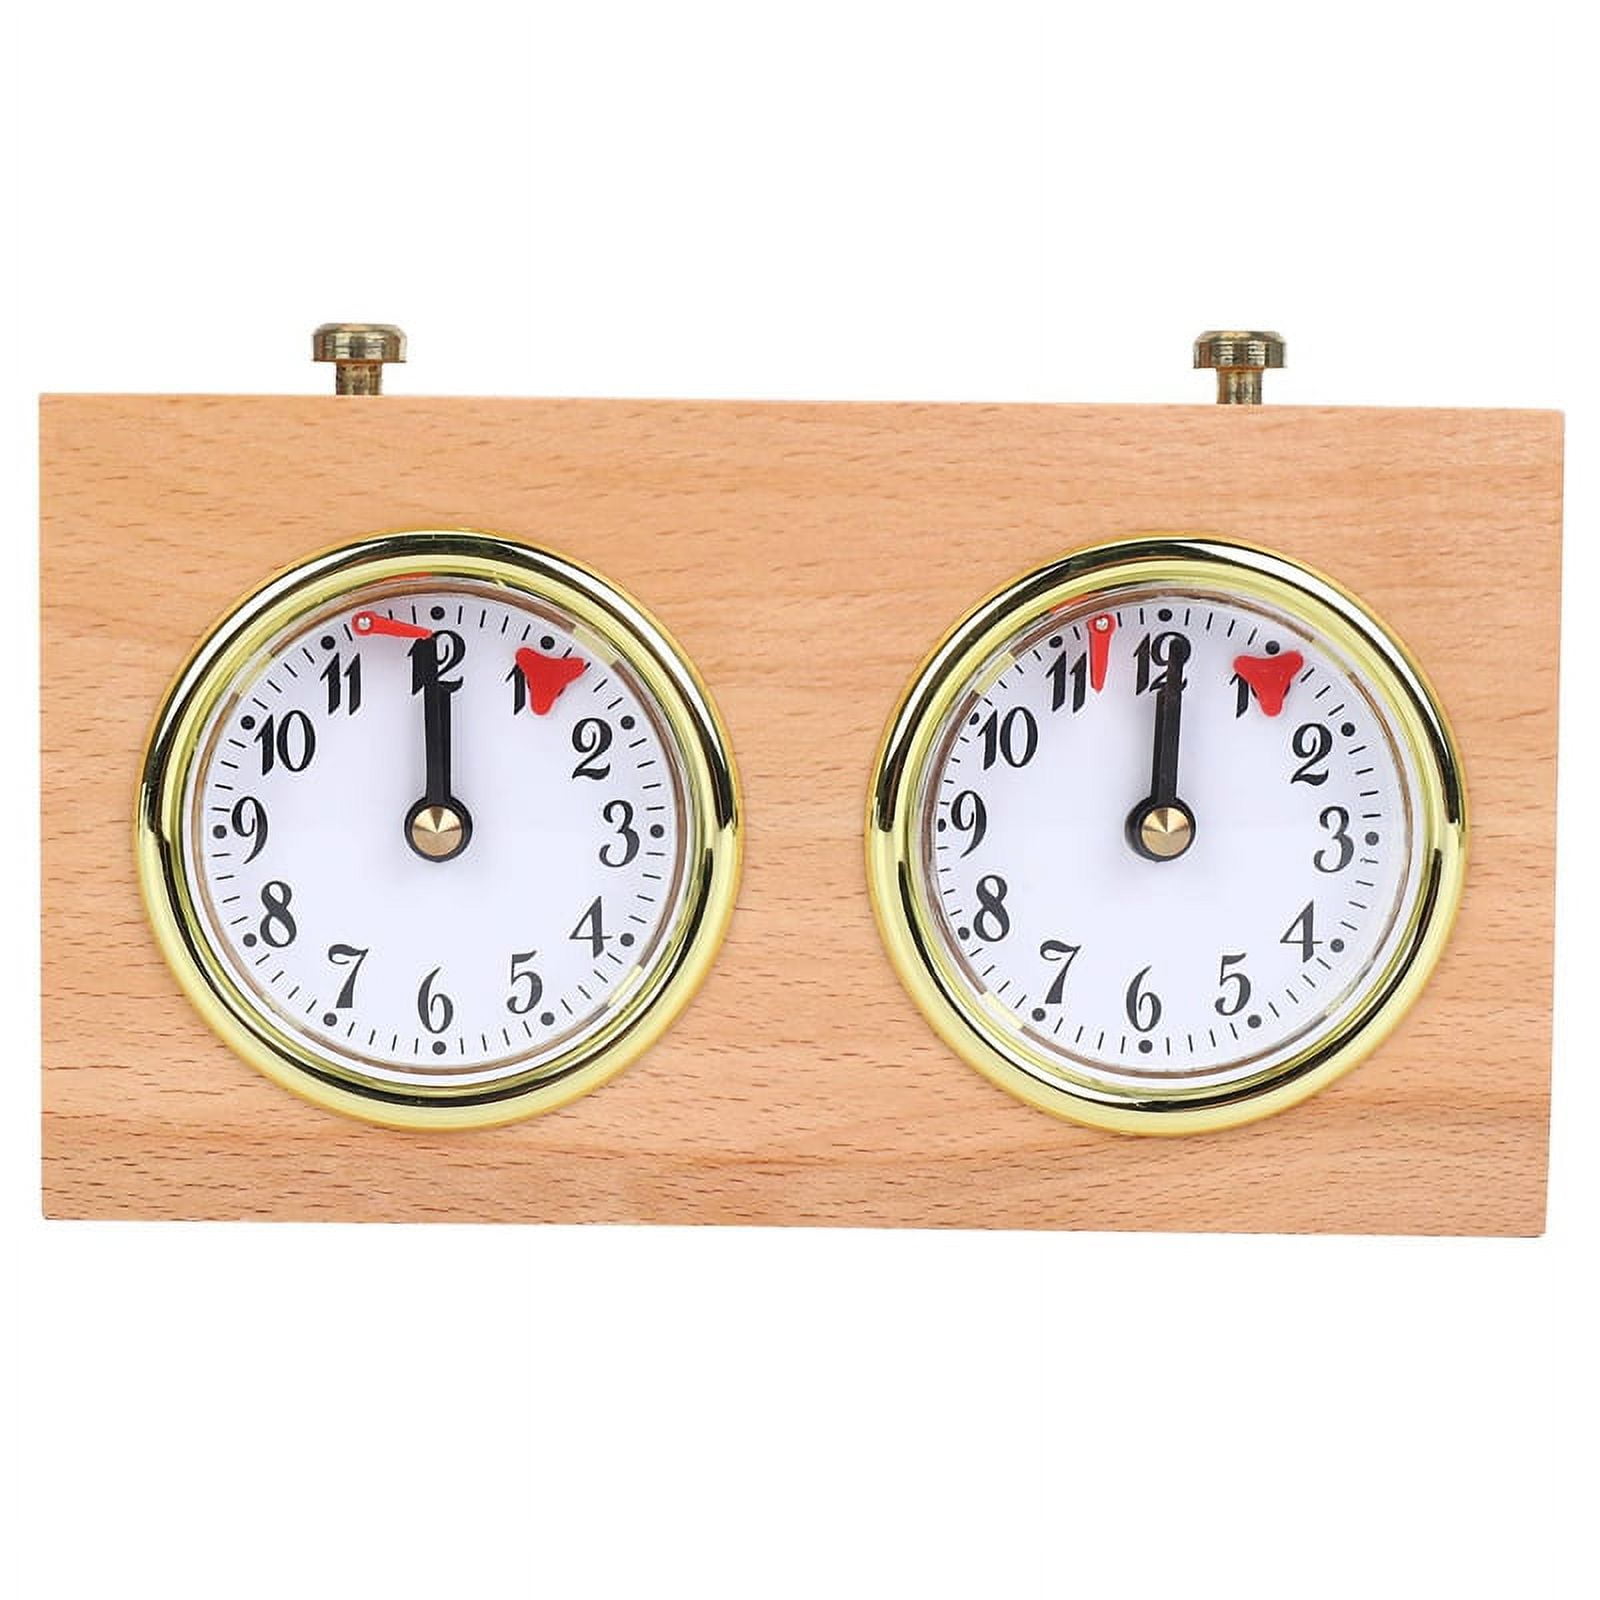 Online Chess Clock Stopwatch Timer - 𝗦𝗰𝗼𝗿𝗲𝗖𝗼𝘂𝗻𝘁.𝗰𝗼𝗺